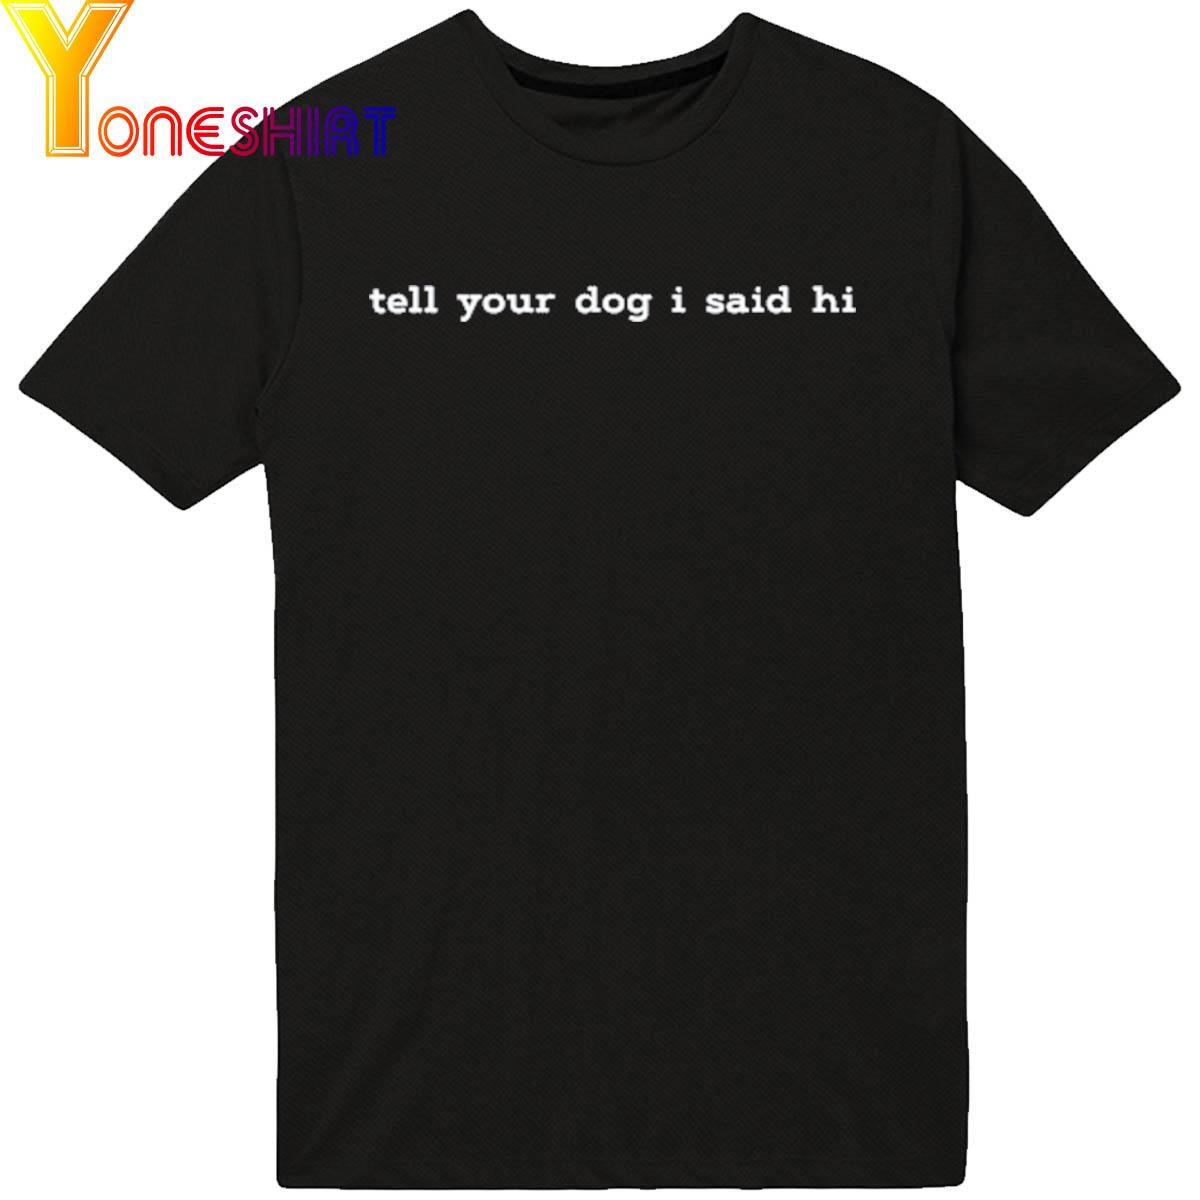 Weratedogs Tell Your Dog I Said Hi shirt